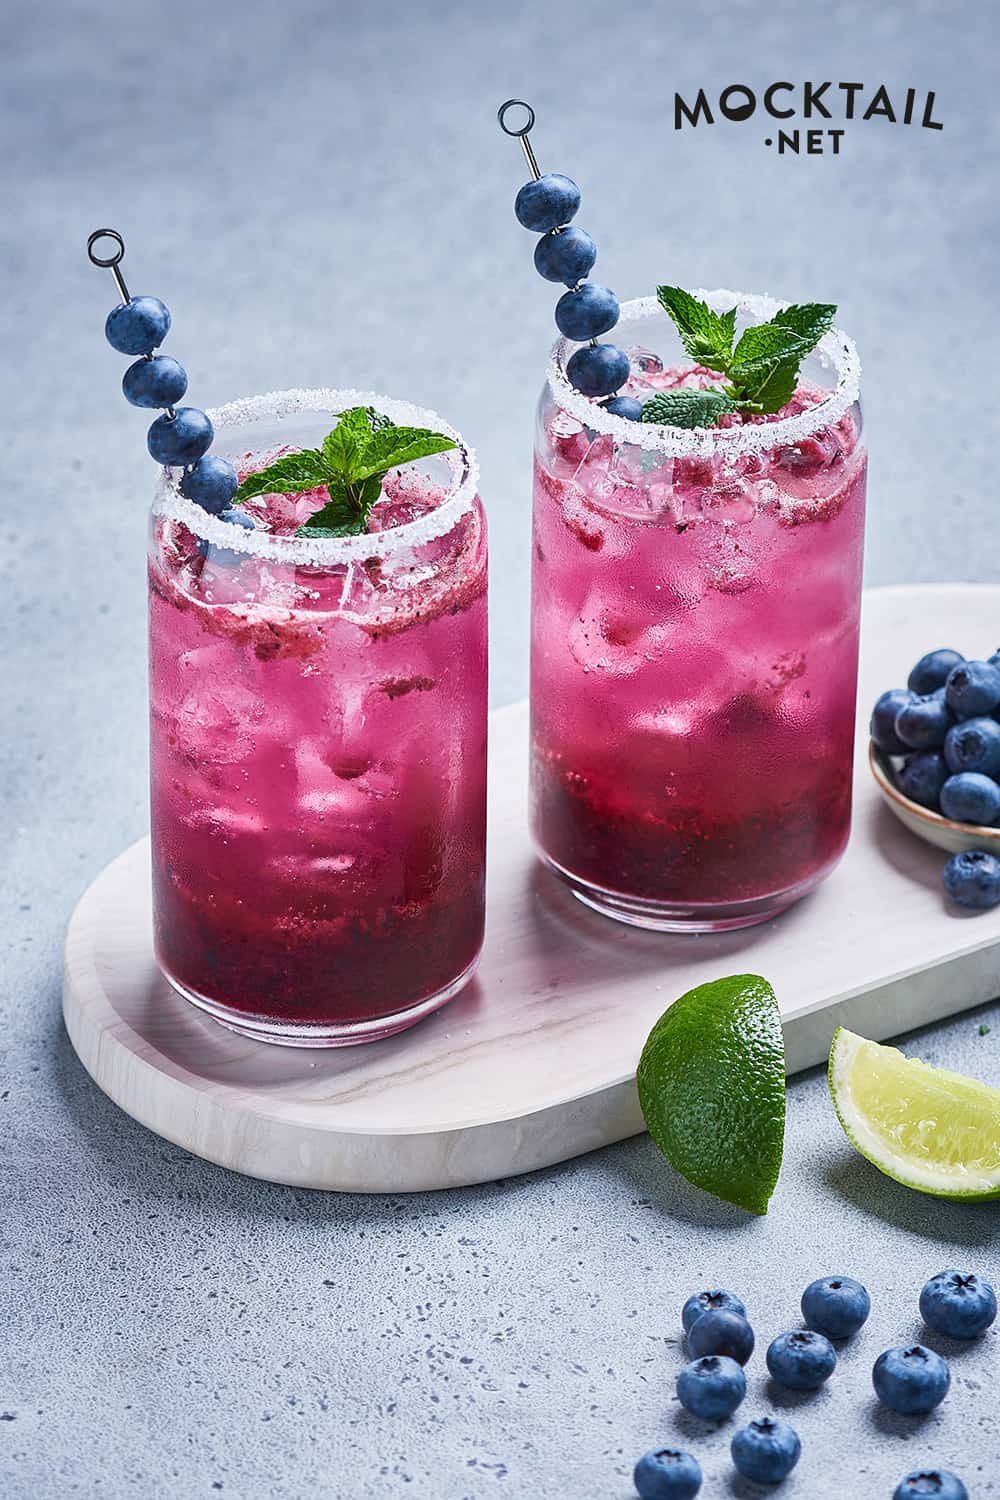 Blueberry Lime Mocktail